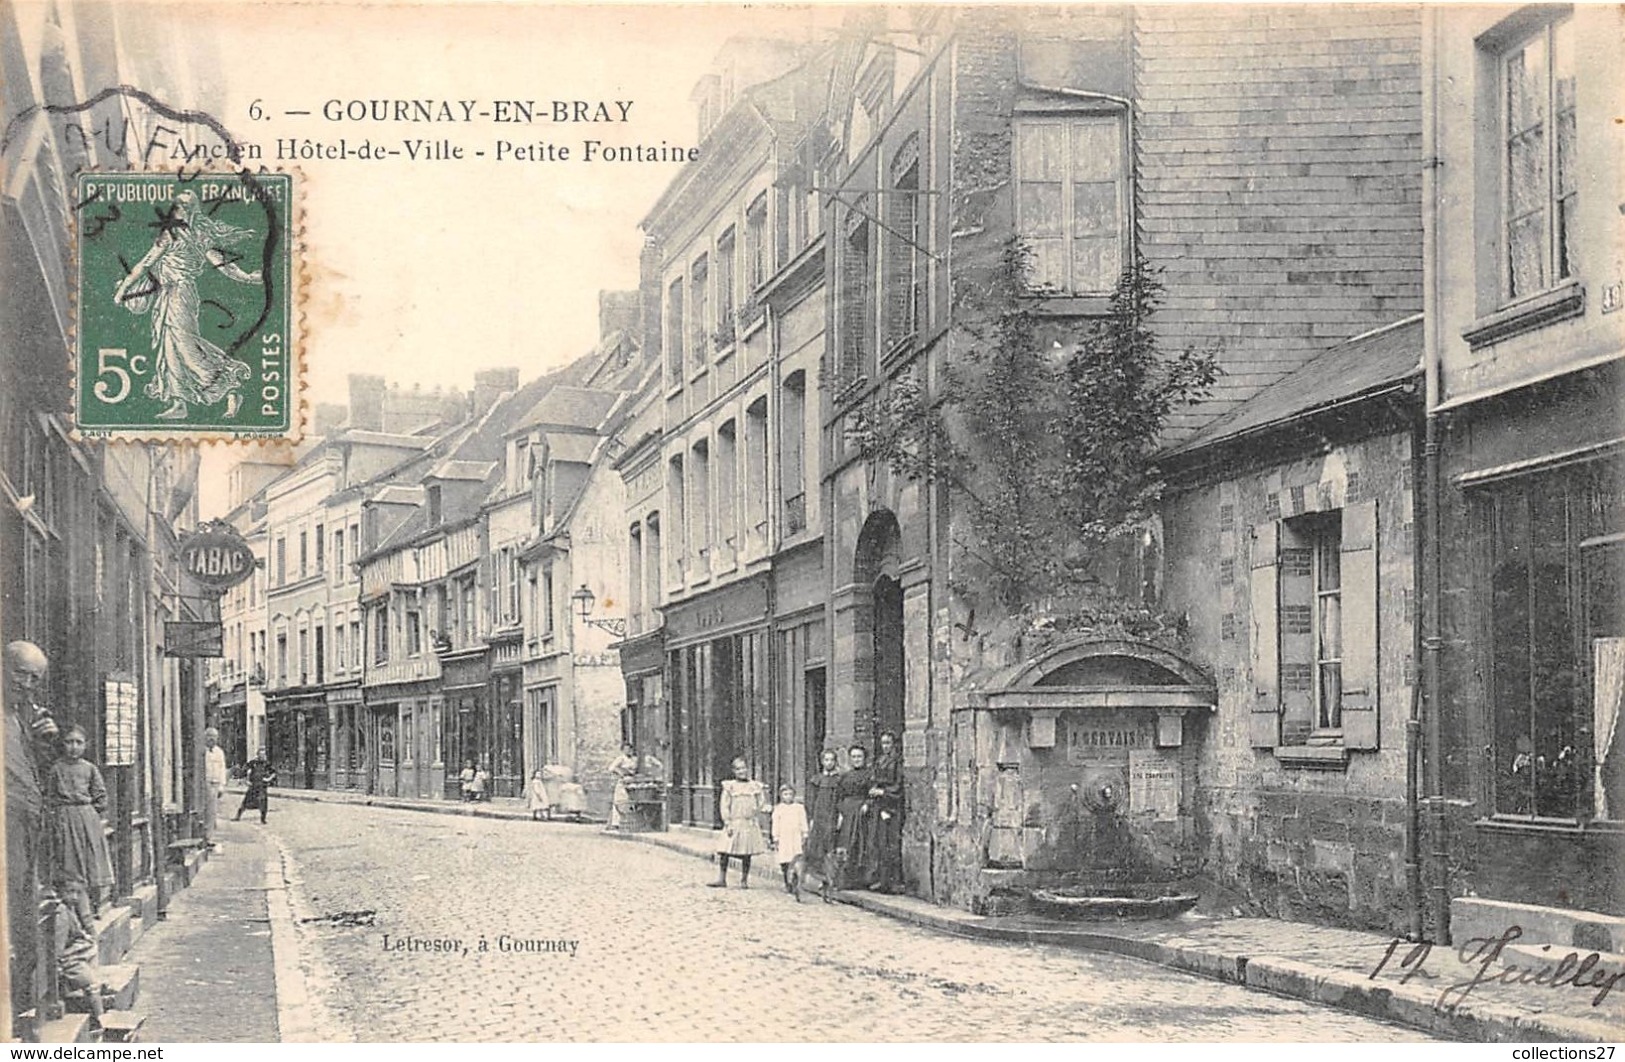 76-GOURNAY-EN-BRAY- ANCIEN HÔTEL DE VILLE, PETITE FONTAINE - Gournay-en-Bray